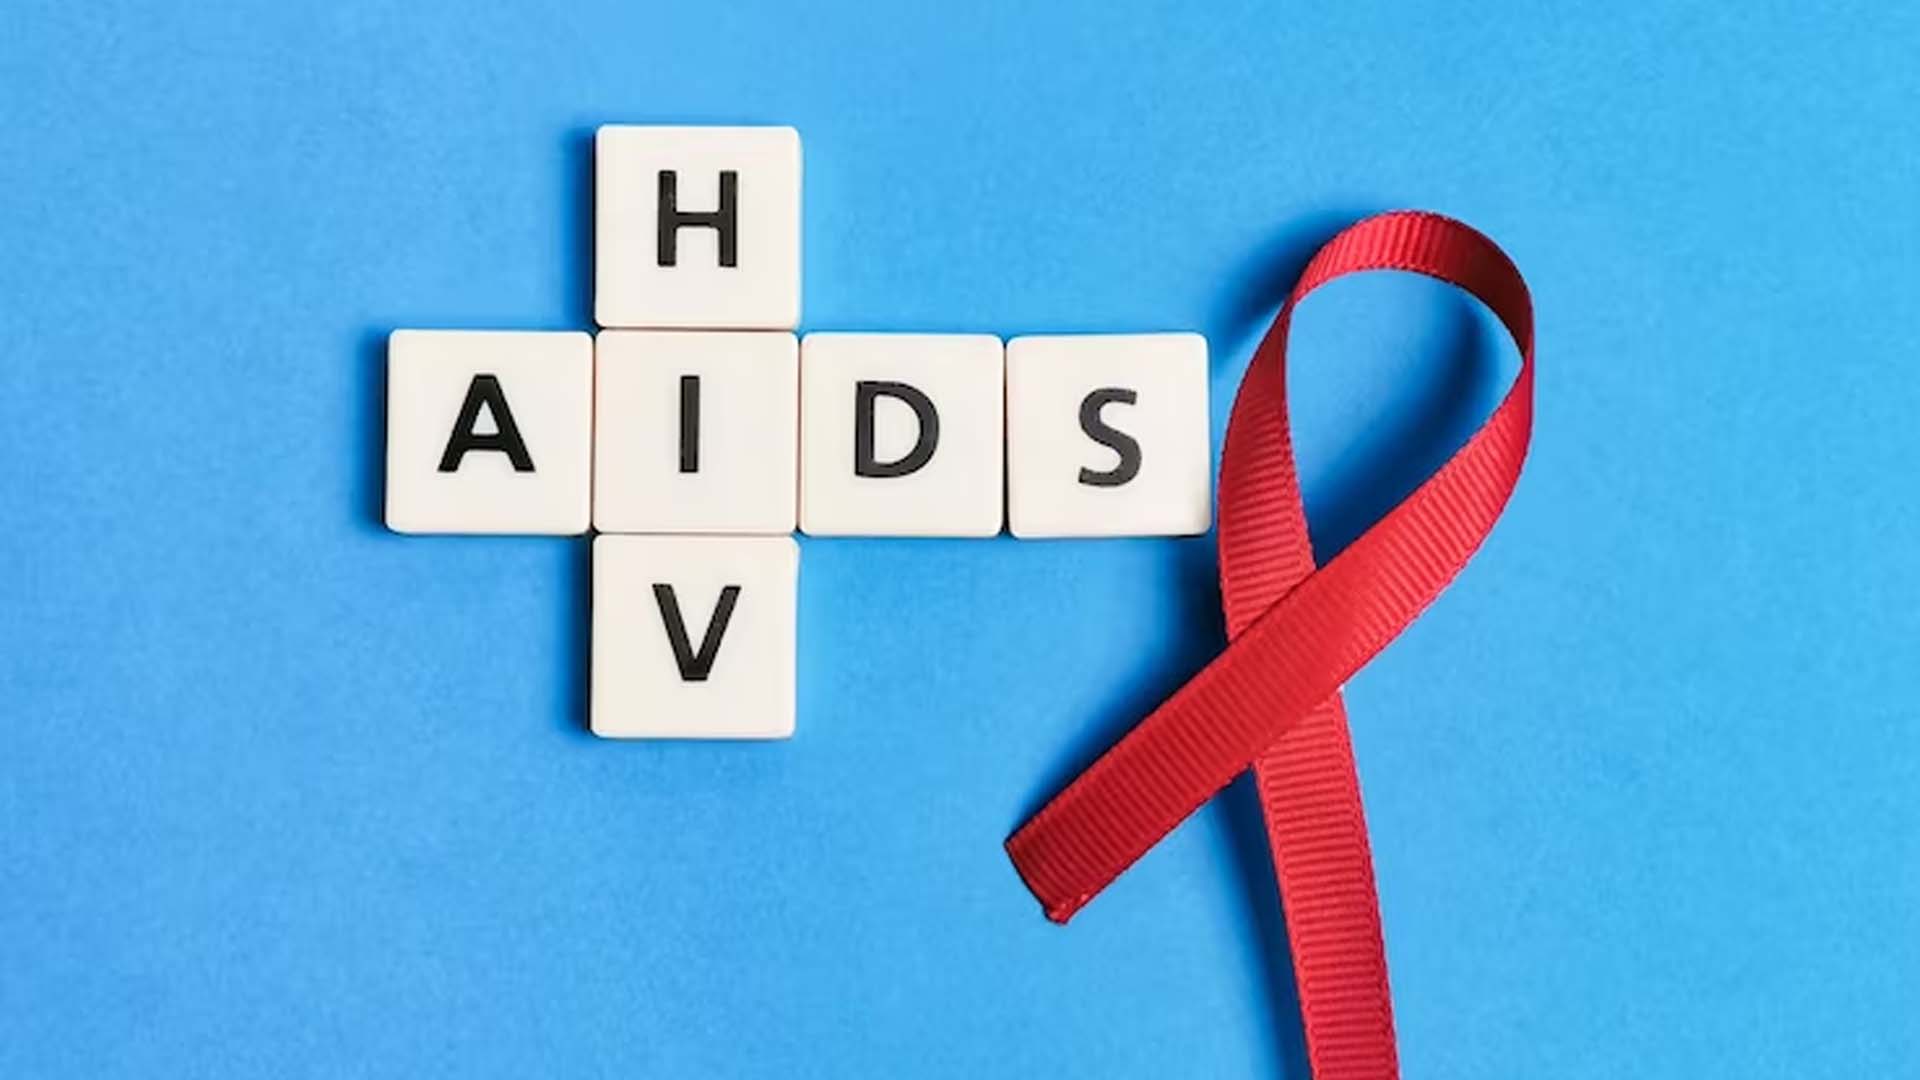 HIV AIS written